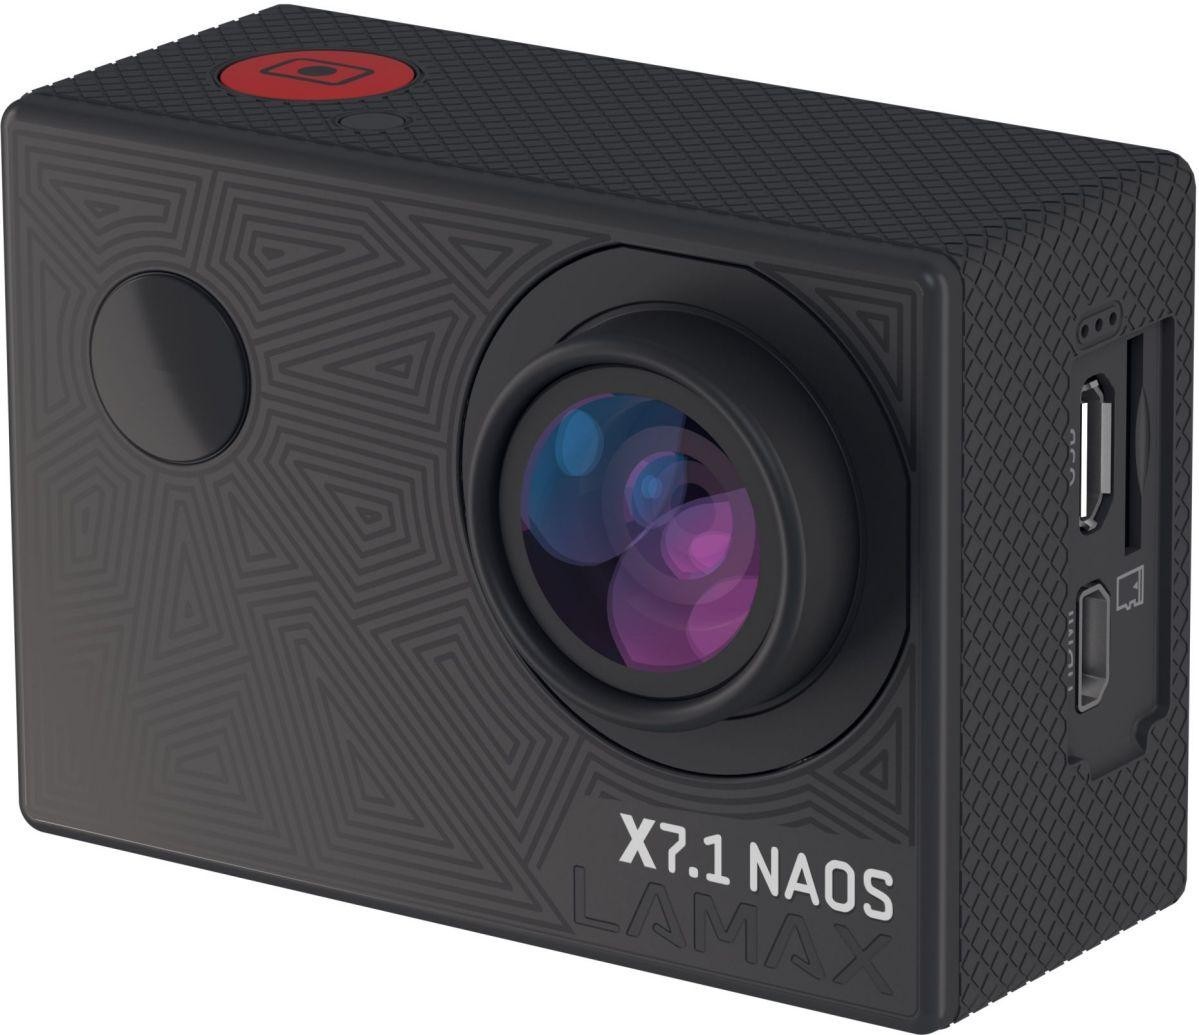 Akční kamera Lamax NAOS X7.1